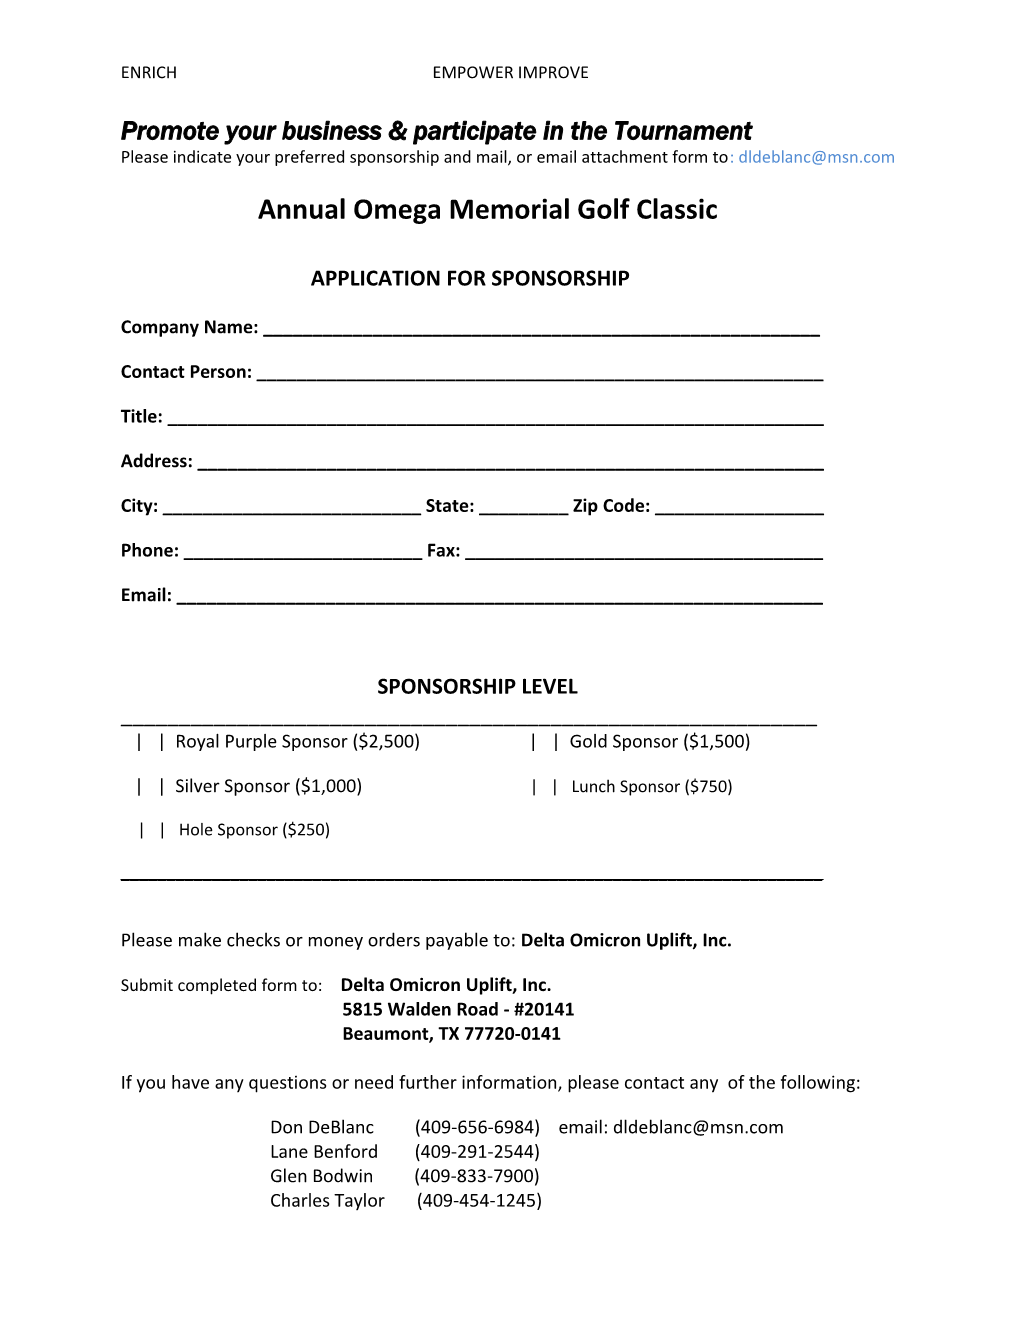 Annual Omega Memorial Golf Classic